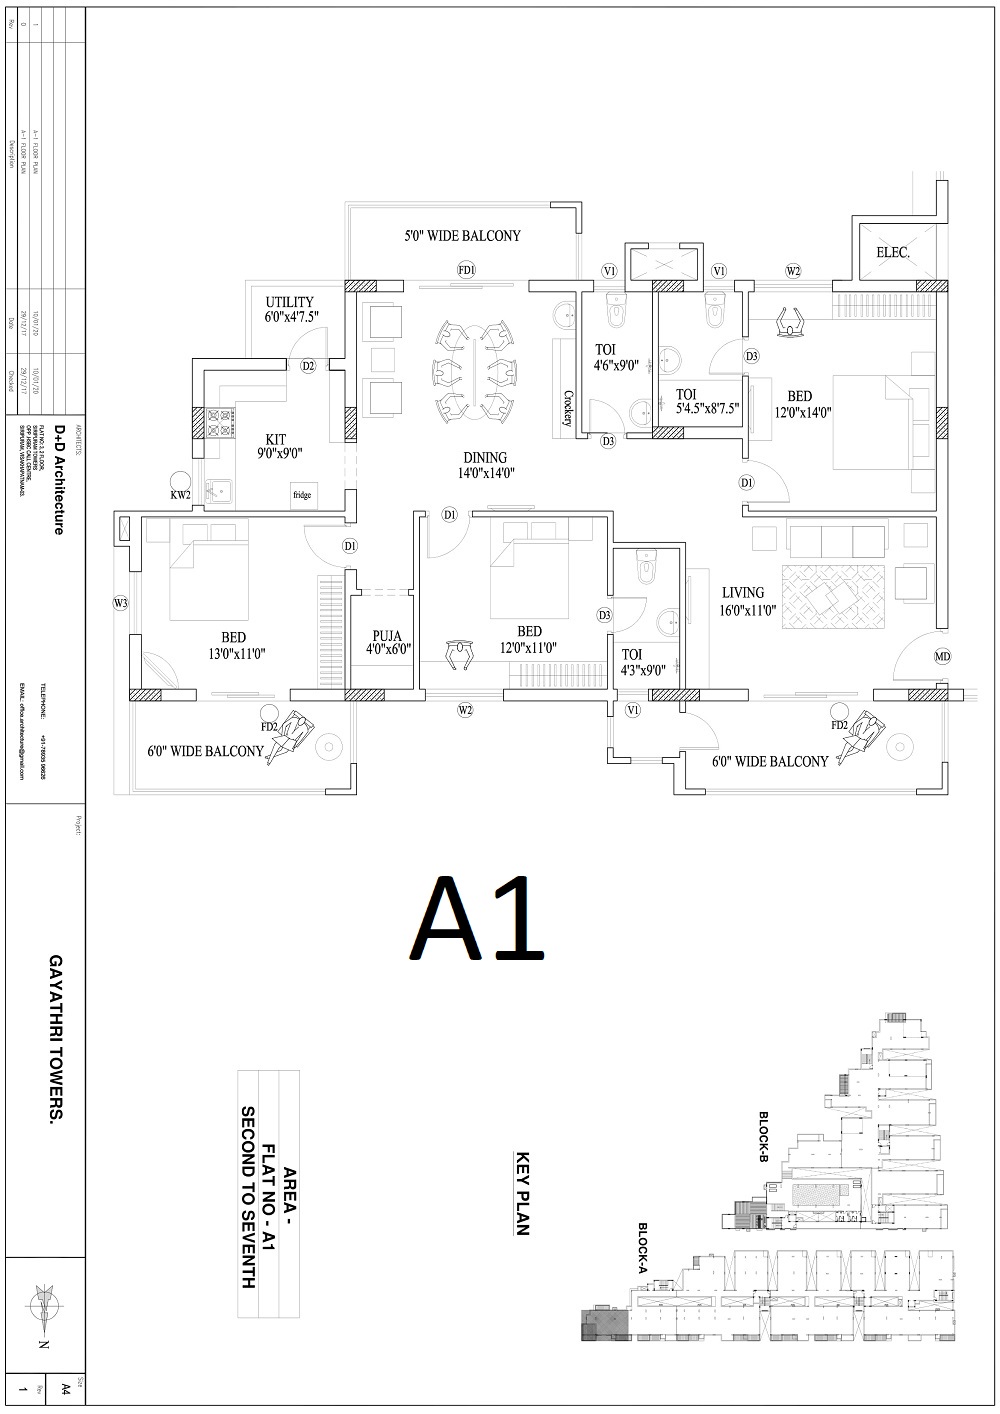 A1 - Tipcal Floor Plan